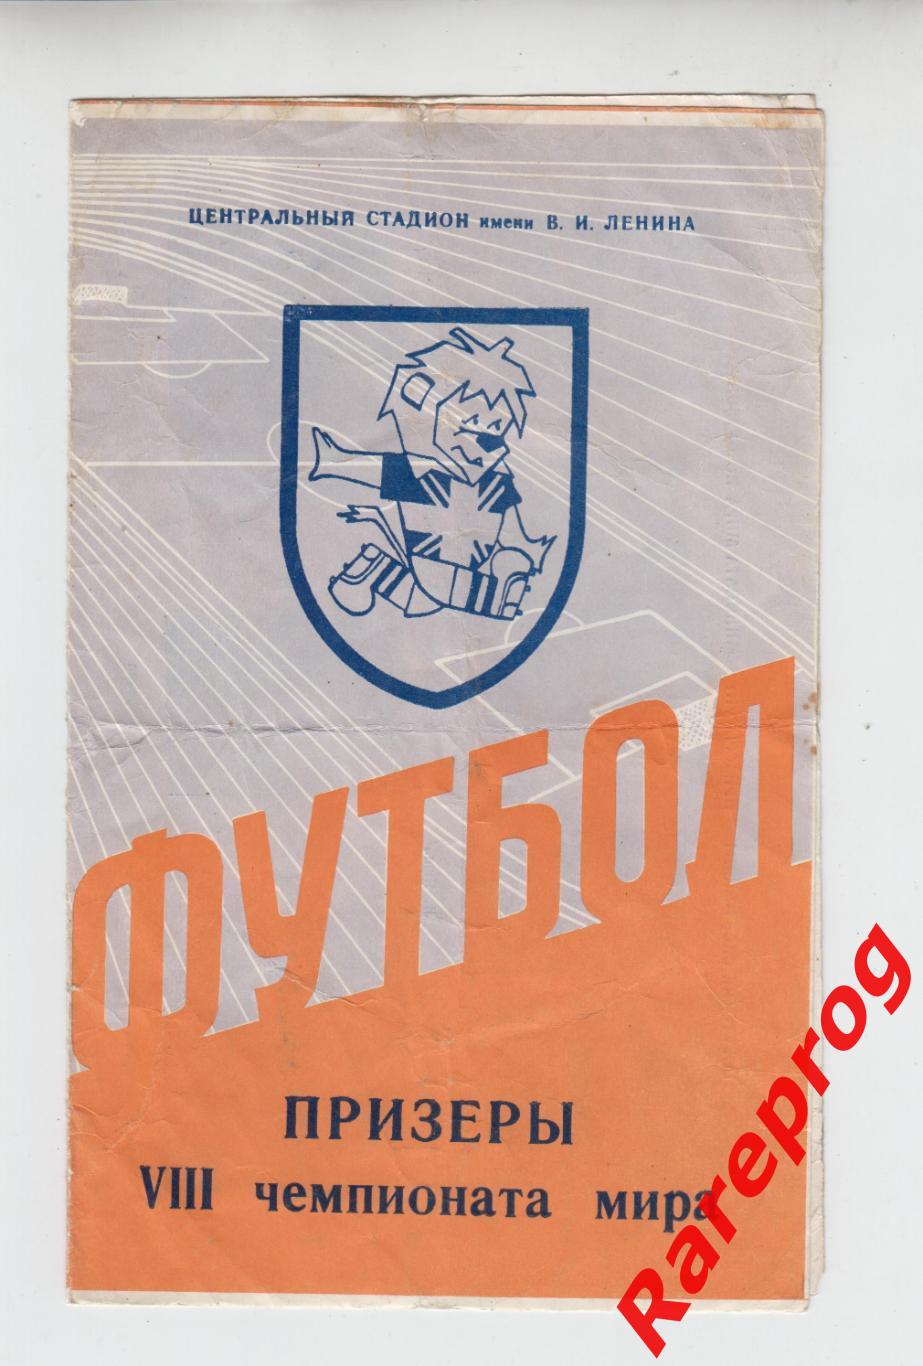 сборная СССР призер Чемпионат Мира ФИФА ЧМ 66 Англия 1966